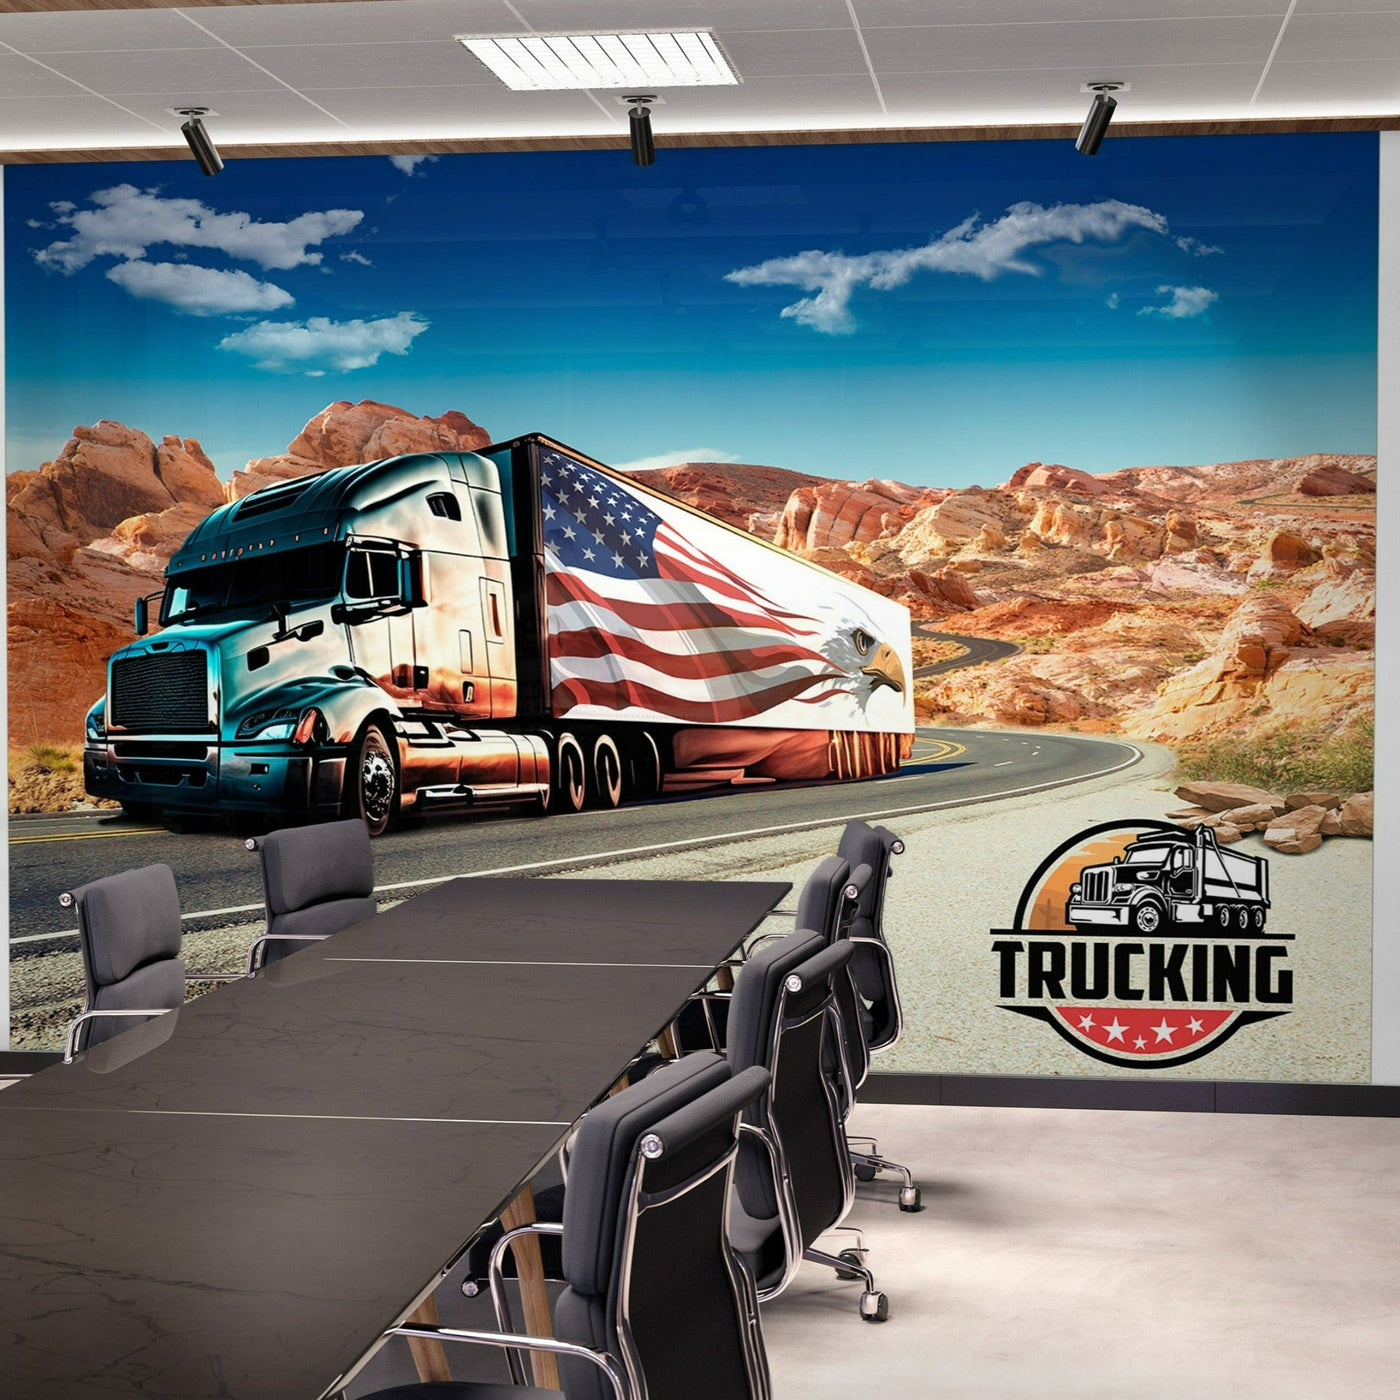 Americana Wallpaper Wall Mural - Eagle Truck-Tiptophomedecor